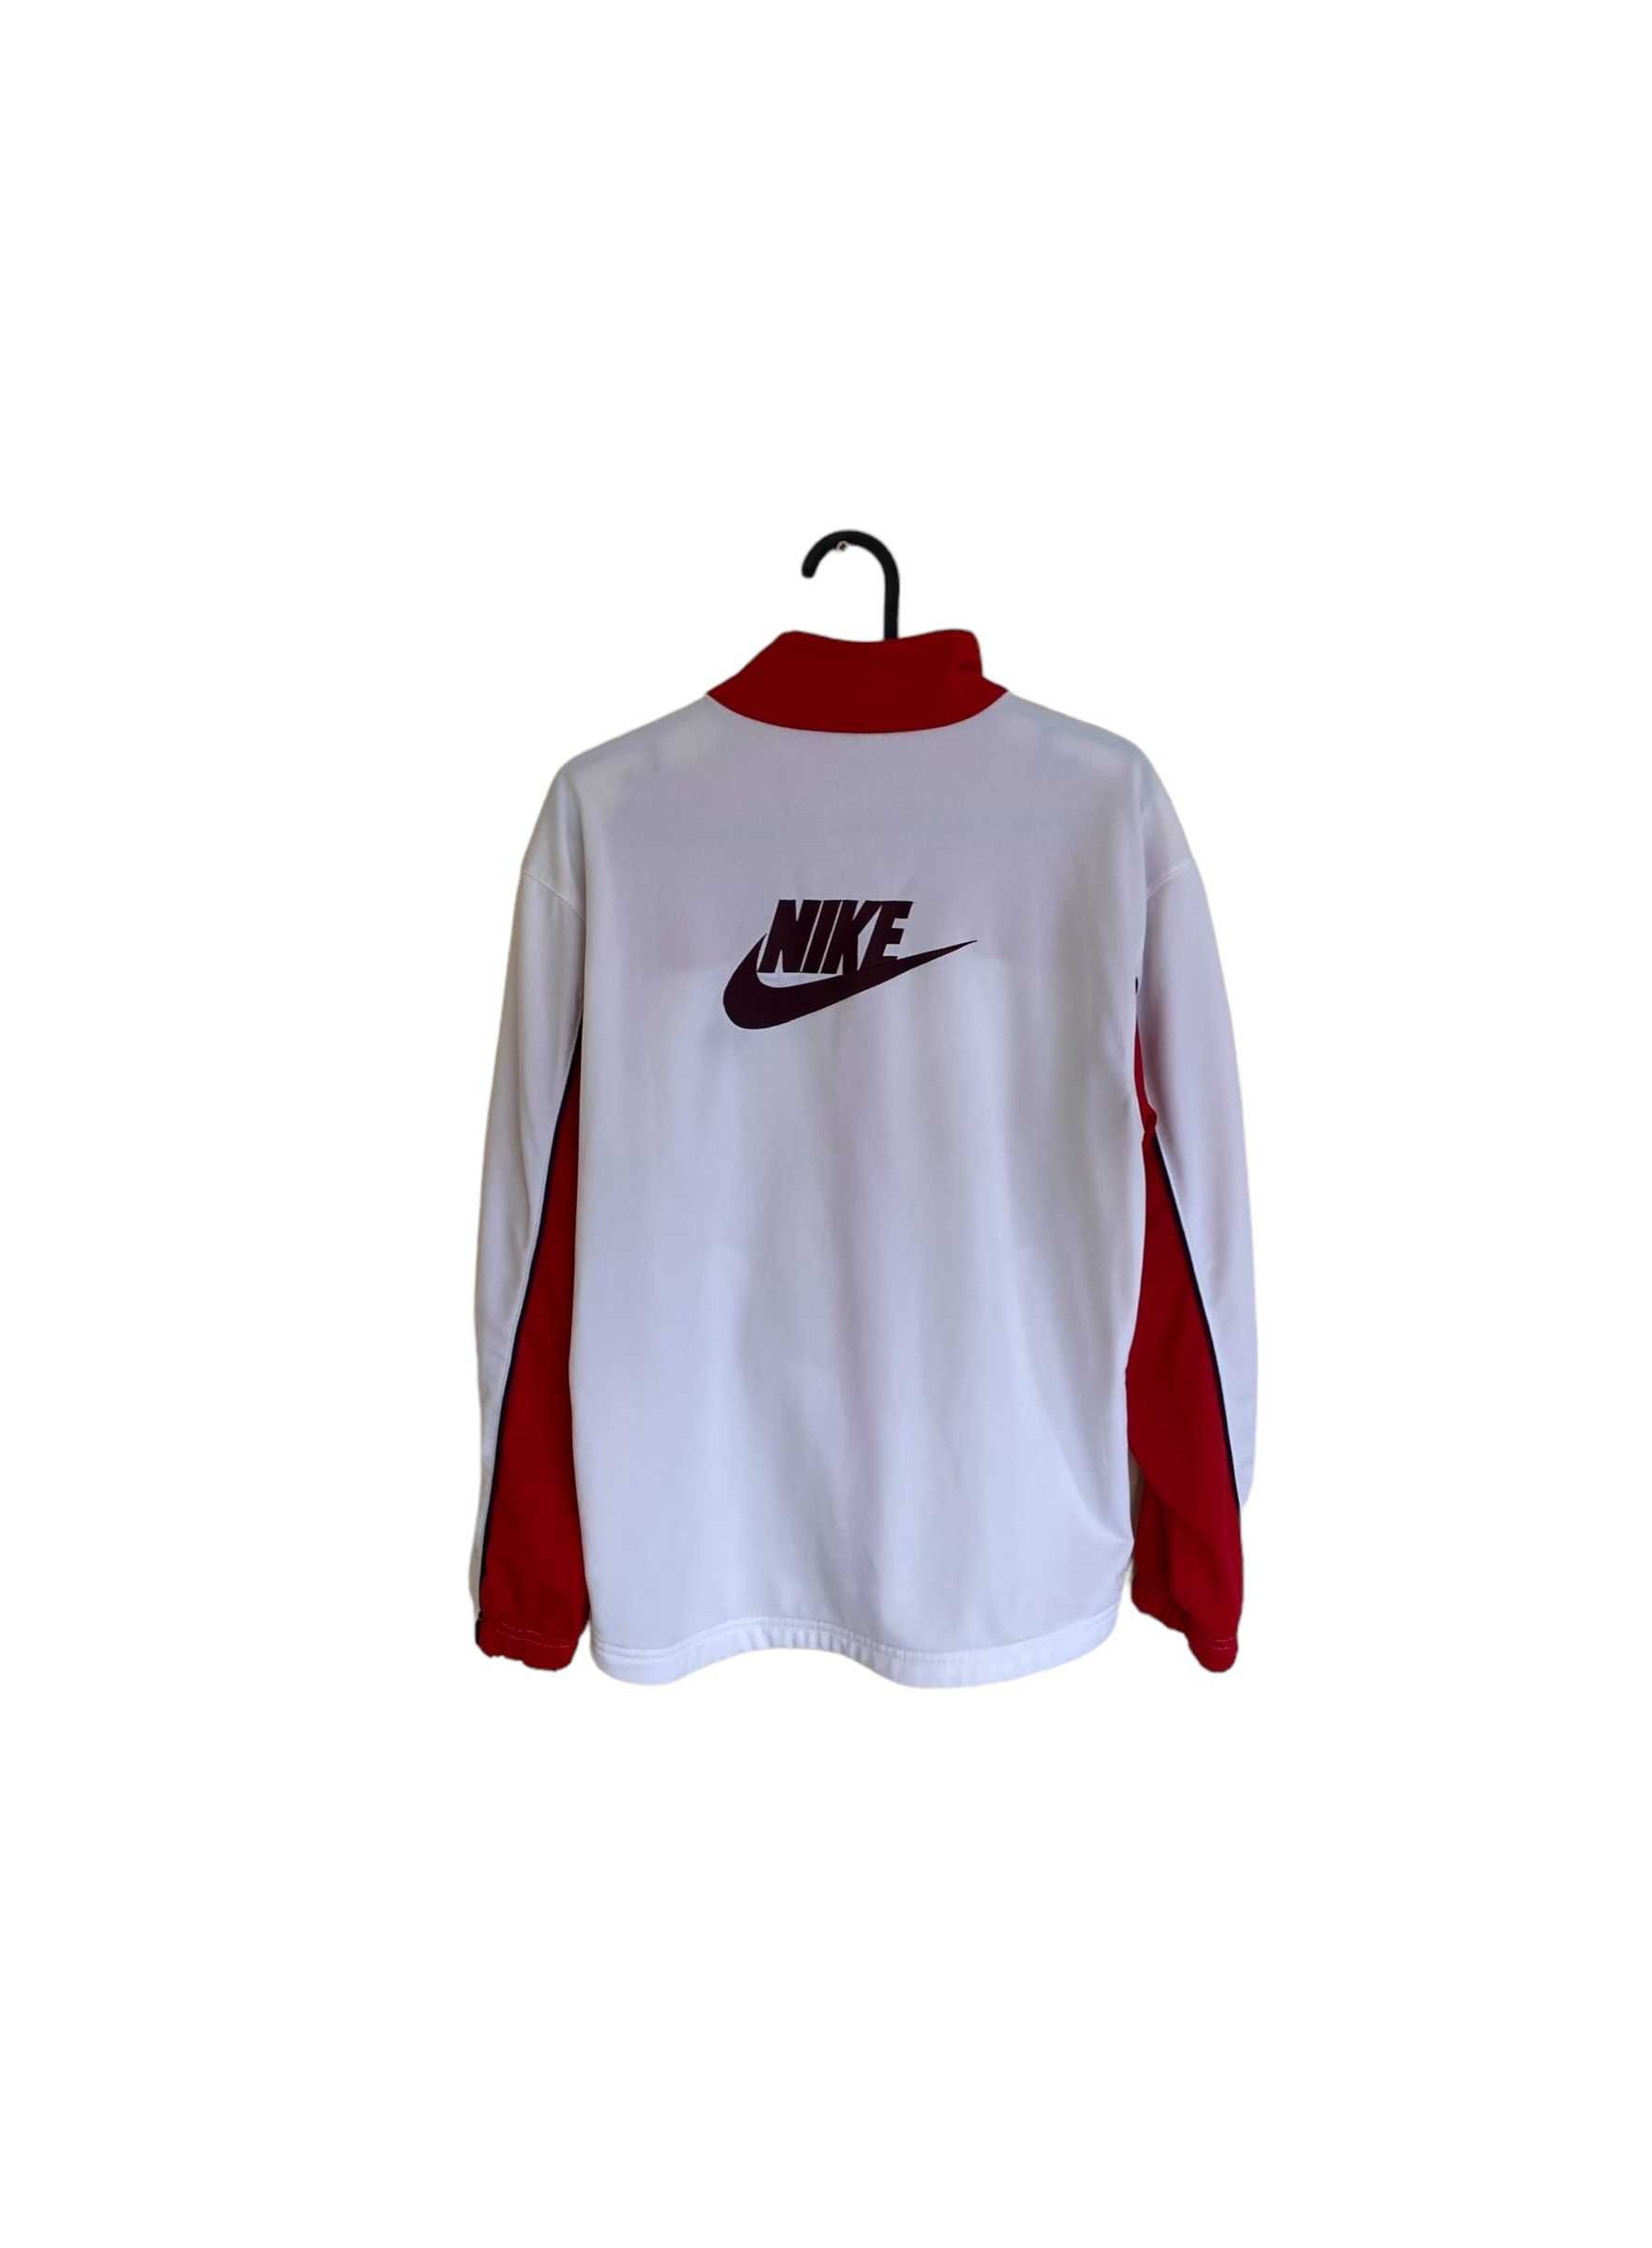 Nike spellout vintage bluza na zamek, rozmiar M, stan bardzo dobry